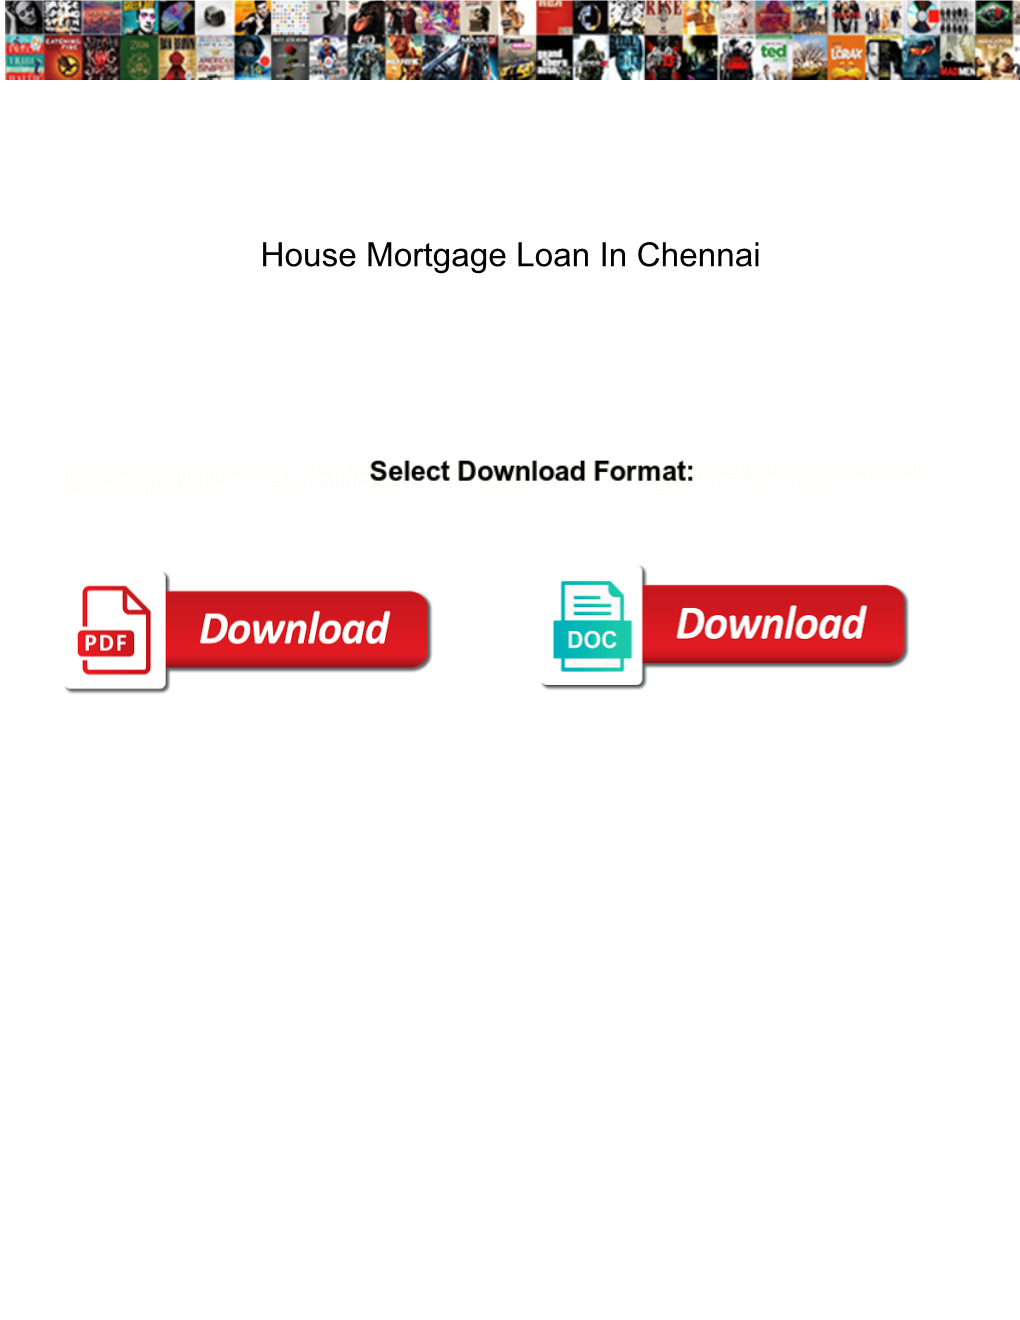 House Mortgage Loan in Chennai